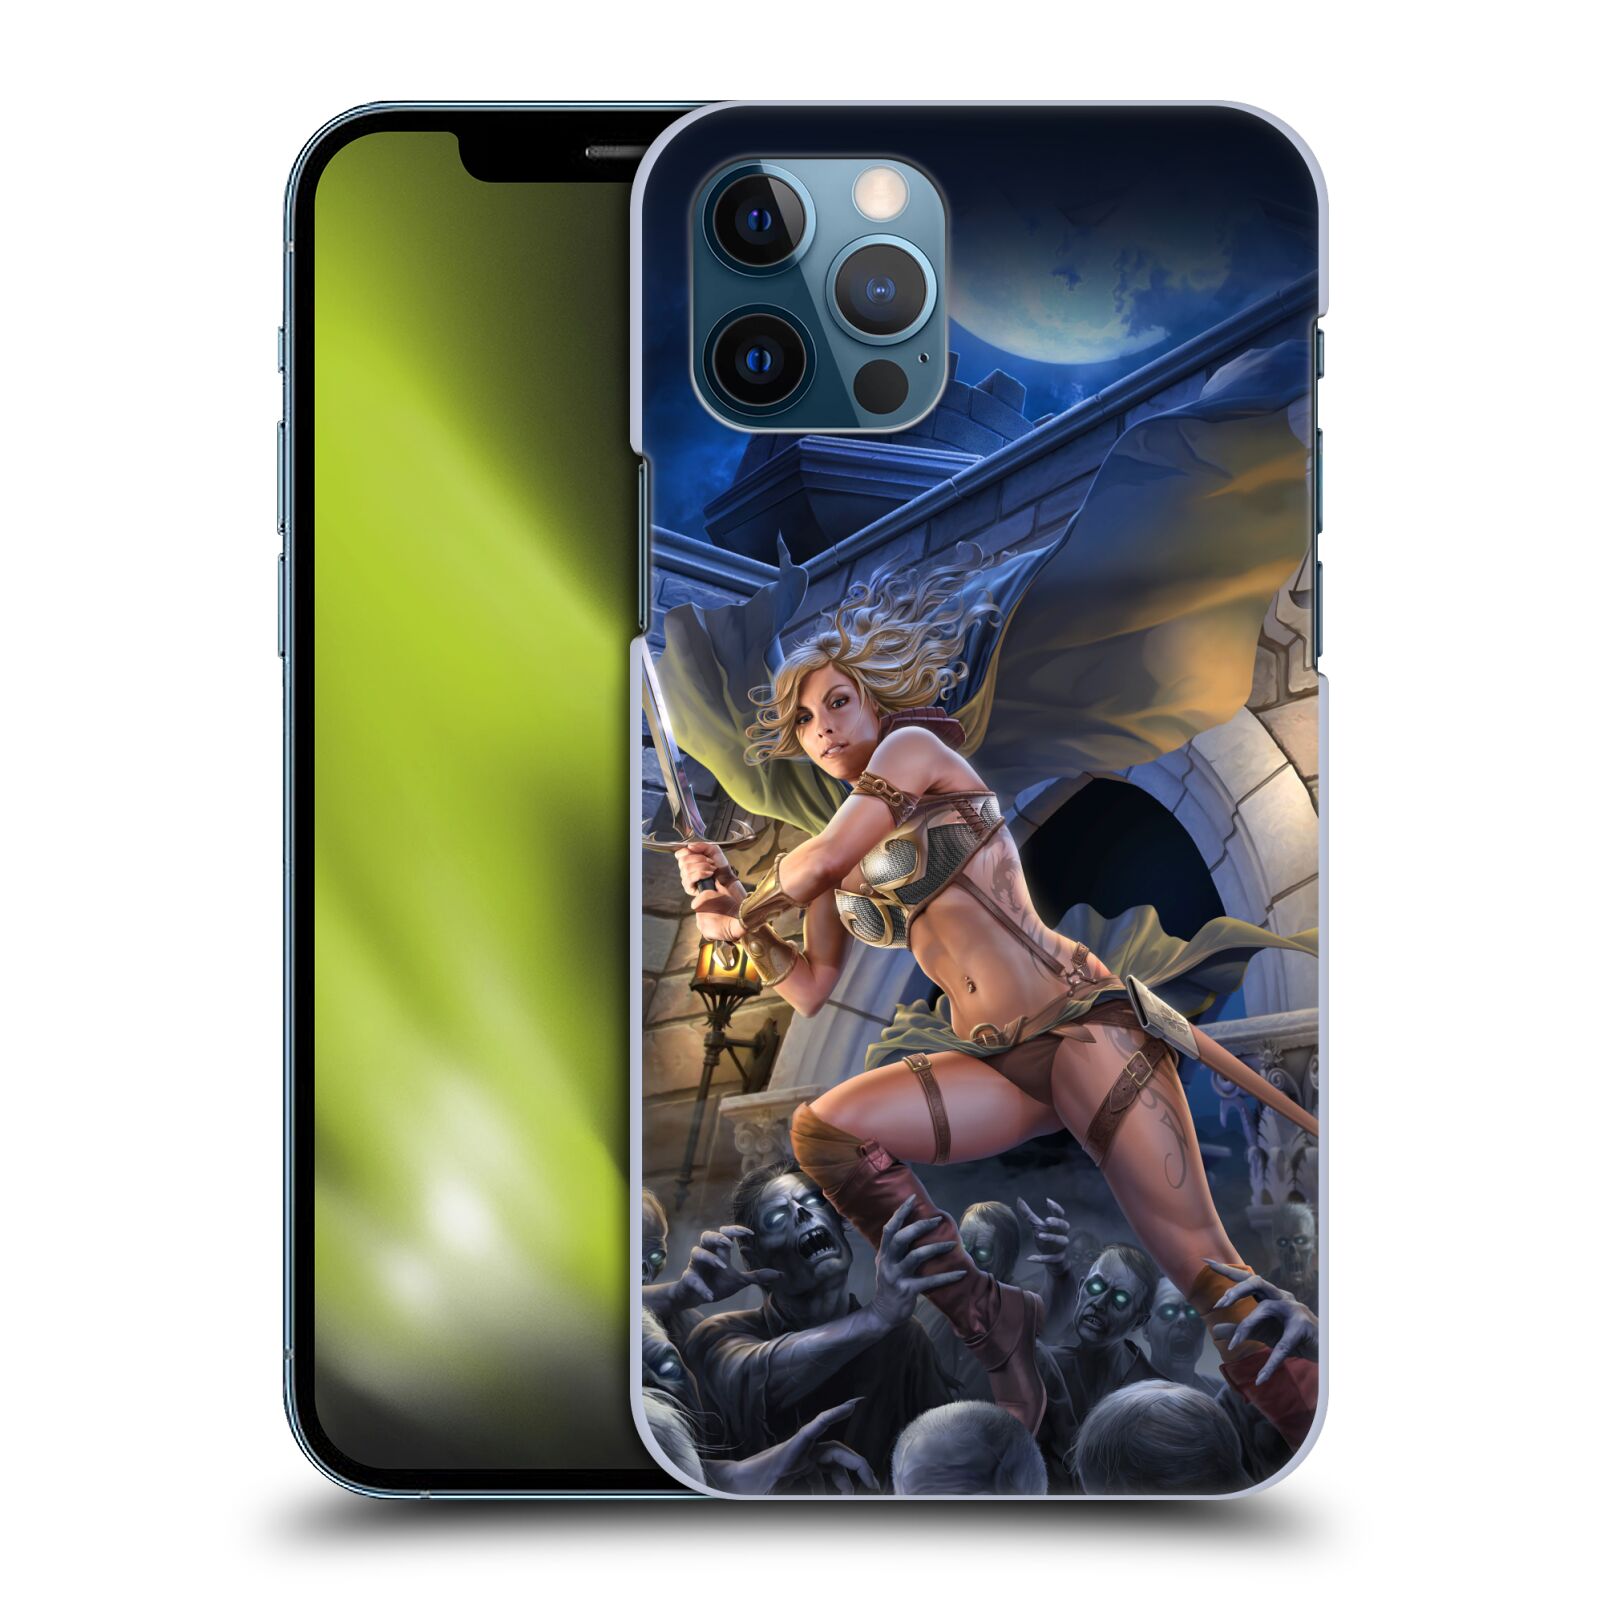 Pouzdro na mobil Apple Iphone 12 / 12 PRO - HEAD CASE - Fantasy kresby Tom Wood - Princezna bojovnice a zombies